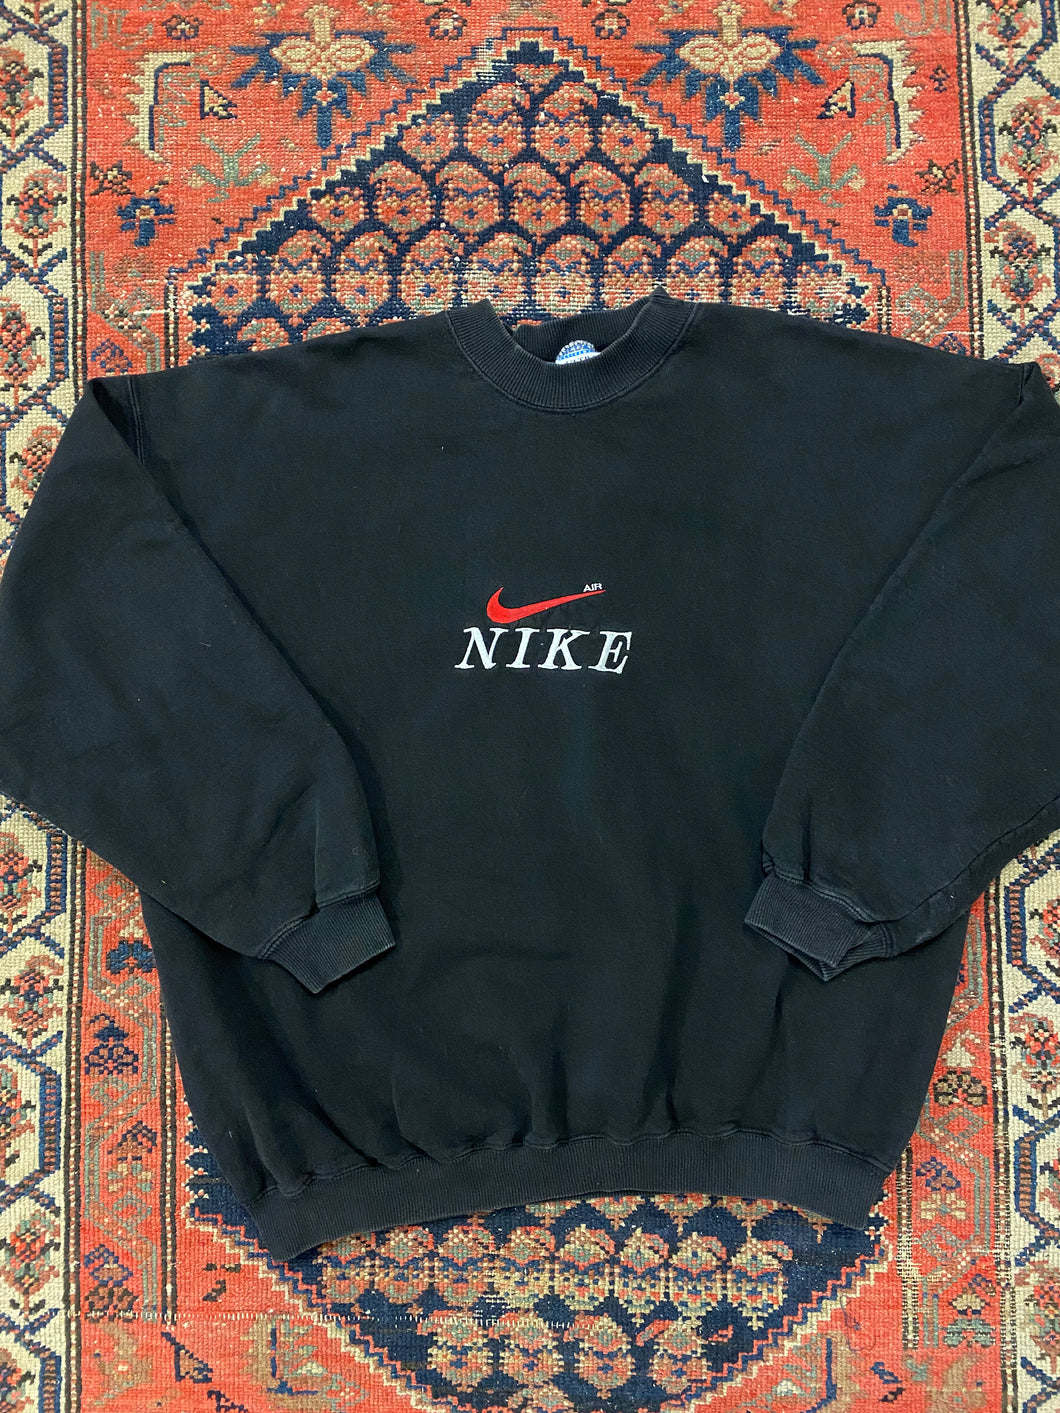 Vintage Bootleg Nike Crewneck - L